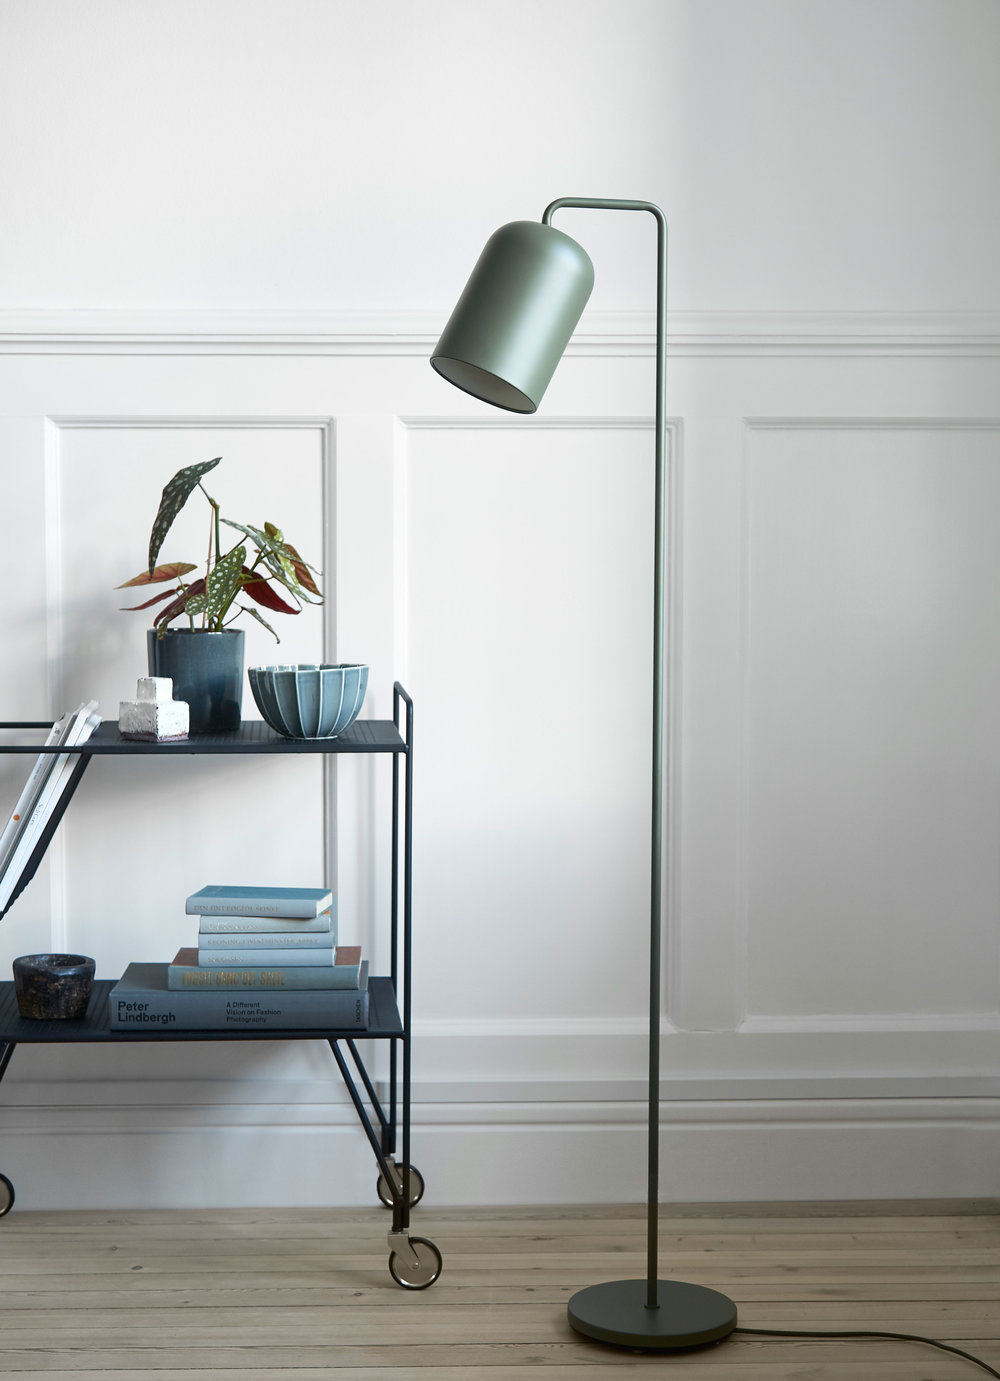 Chill Floor Lamp Frandsen Retail intended for dimensions 1000 X 1381